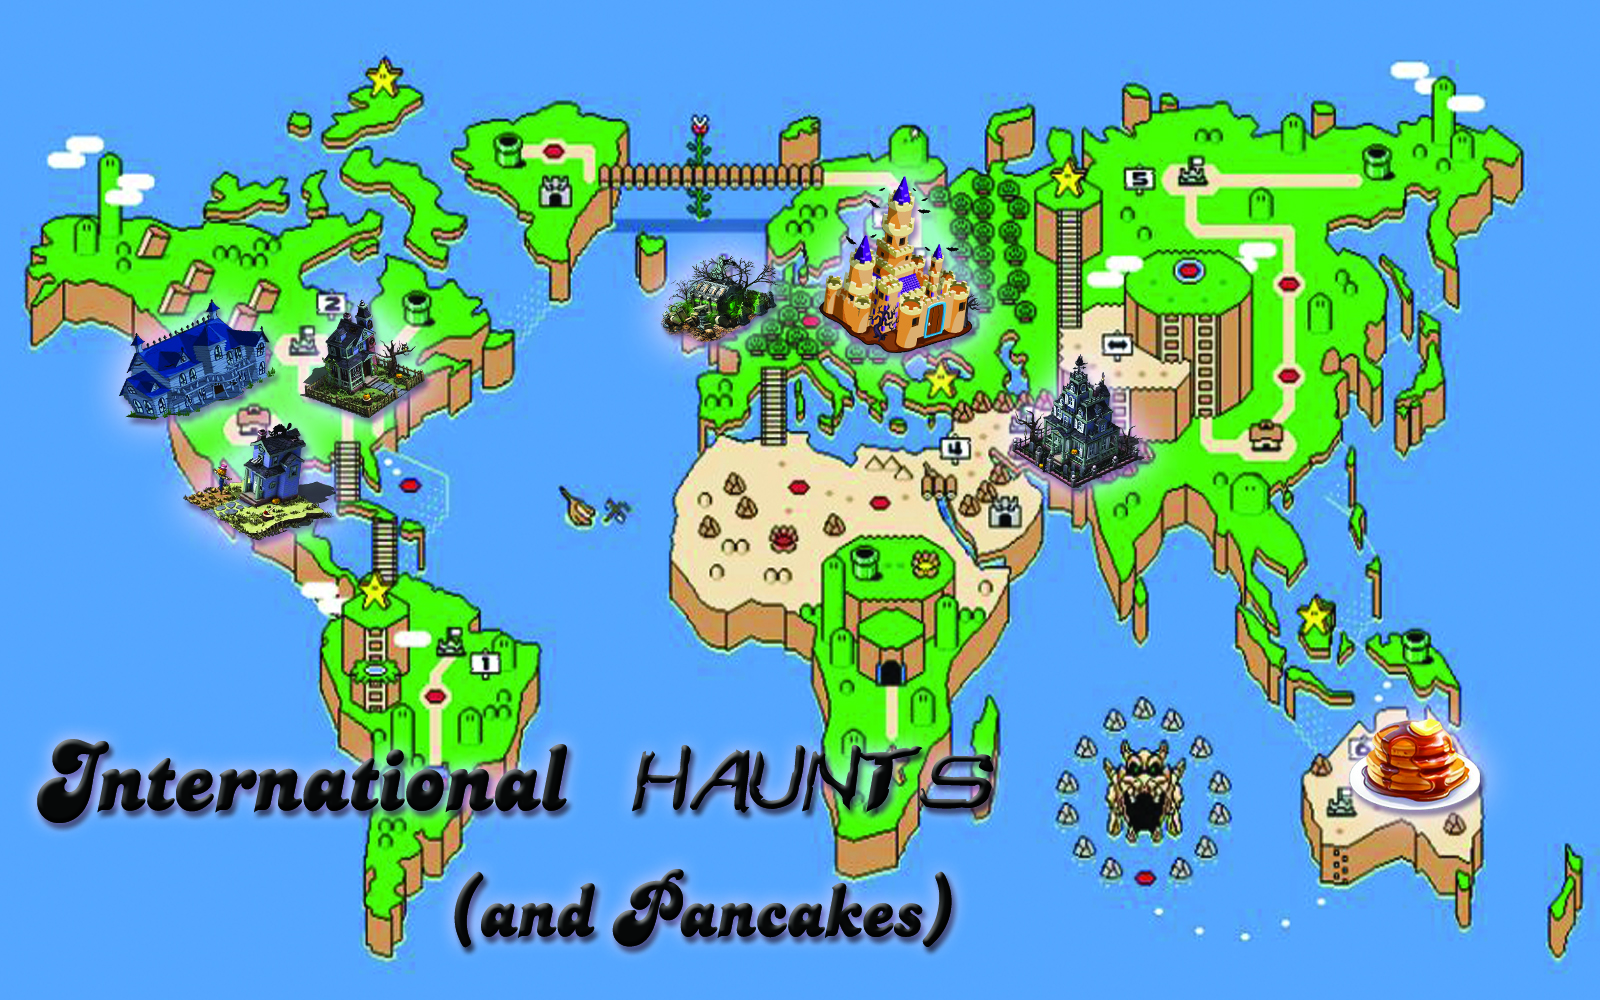 International Haunts